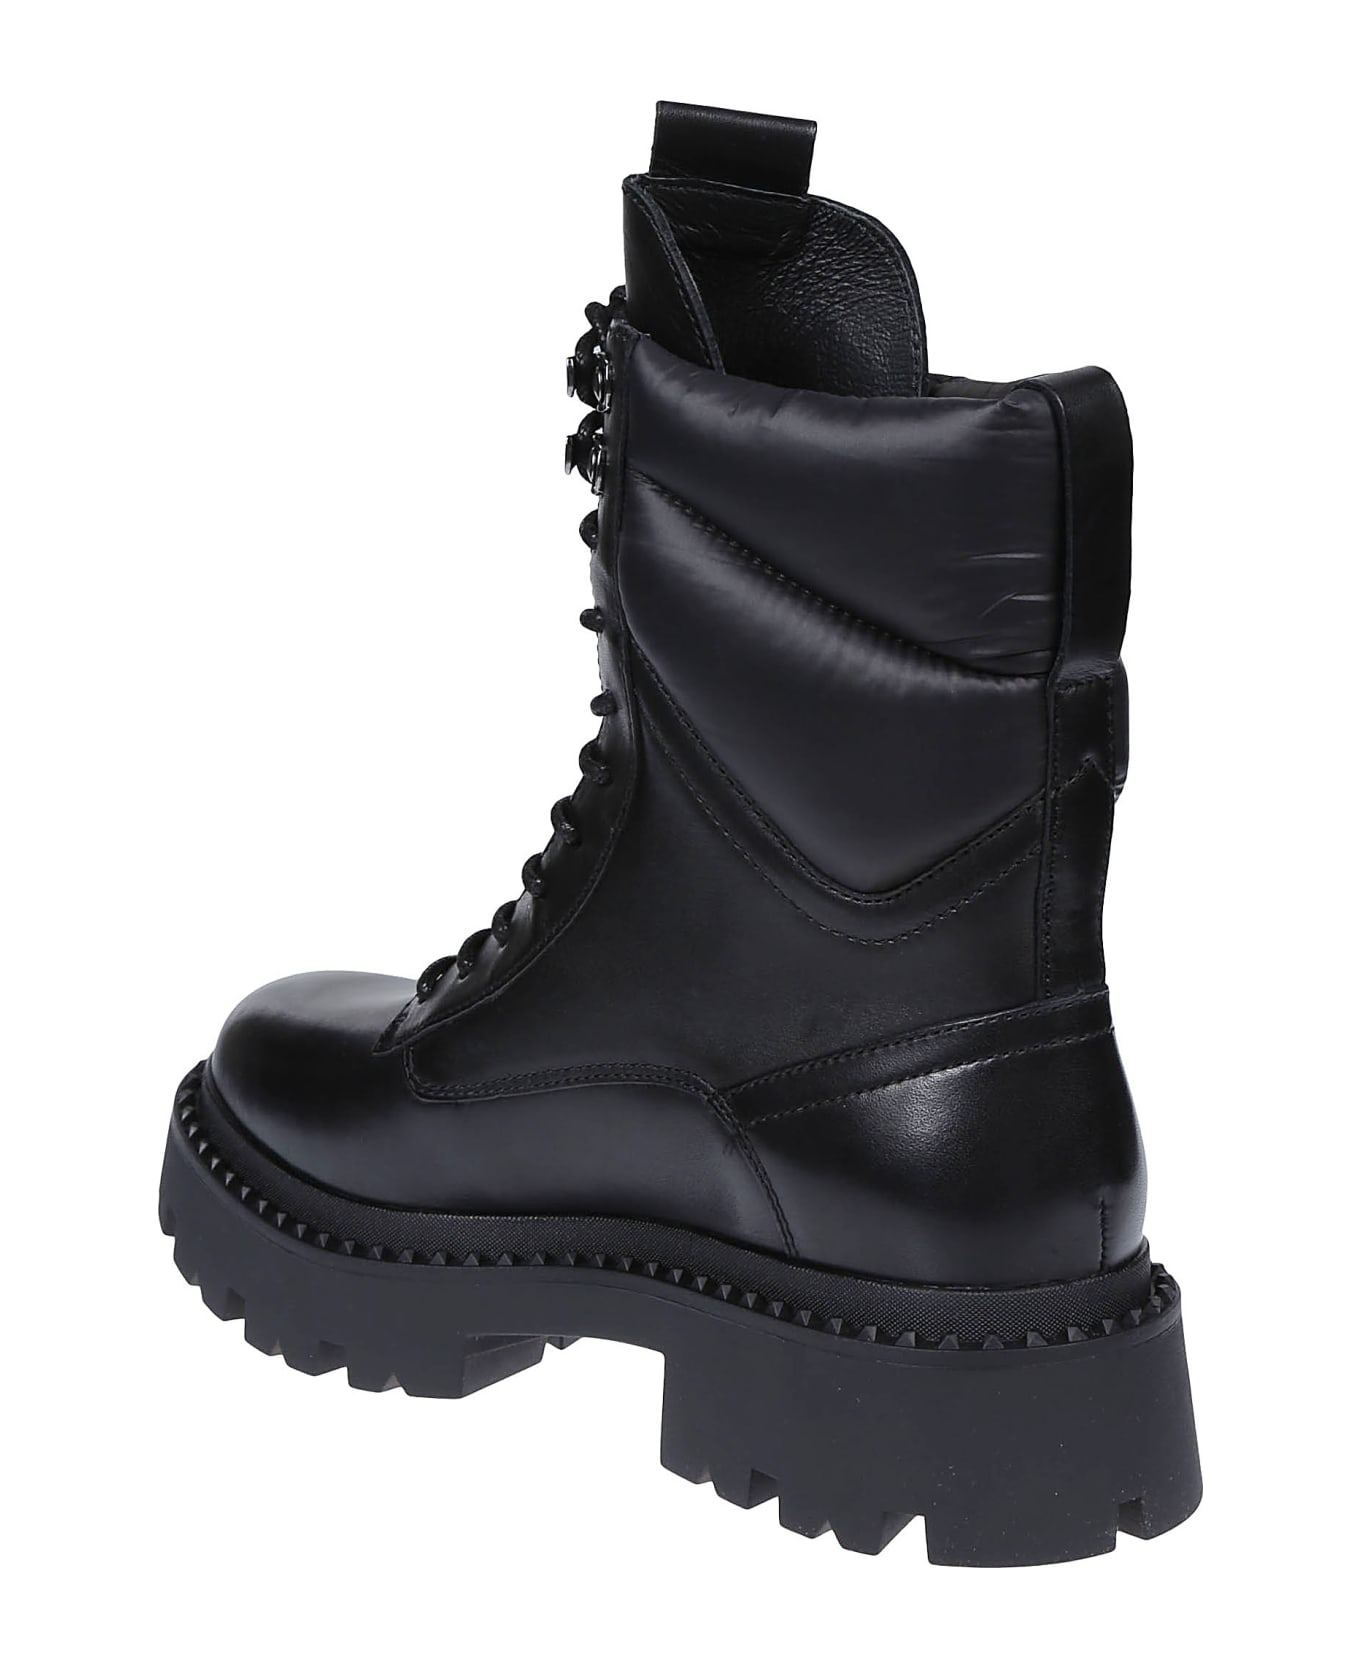 Ash Gotta Combat Ankle Boots - Black/shinypuffy Black